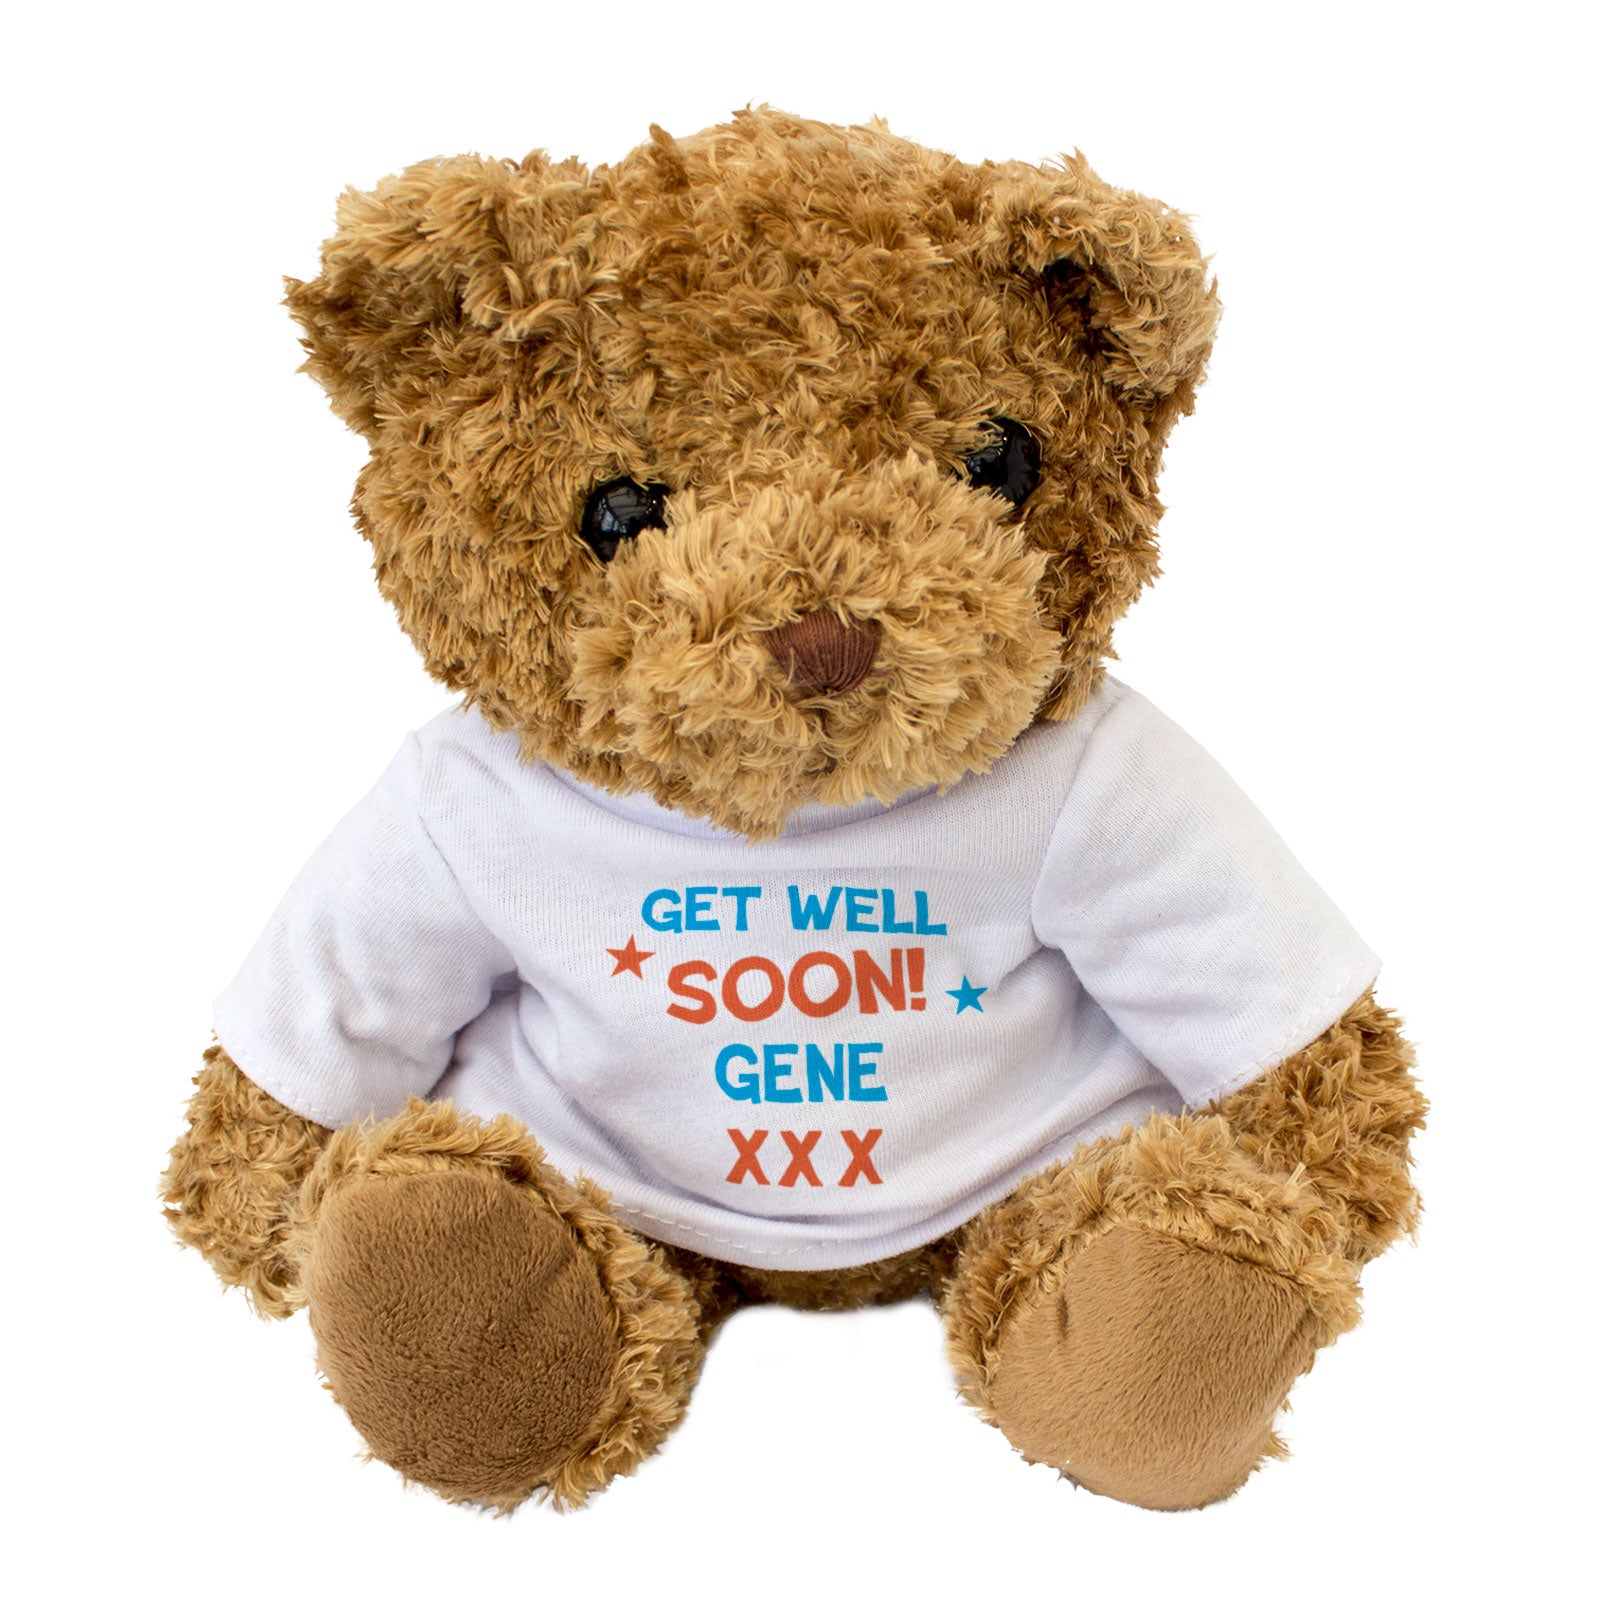 Get Well Soon Gene - Teddy Bear